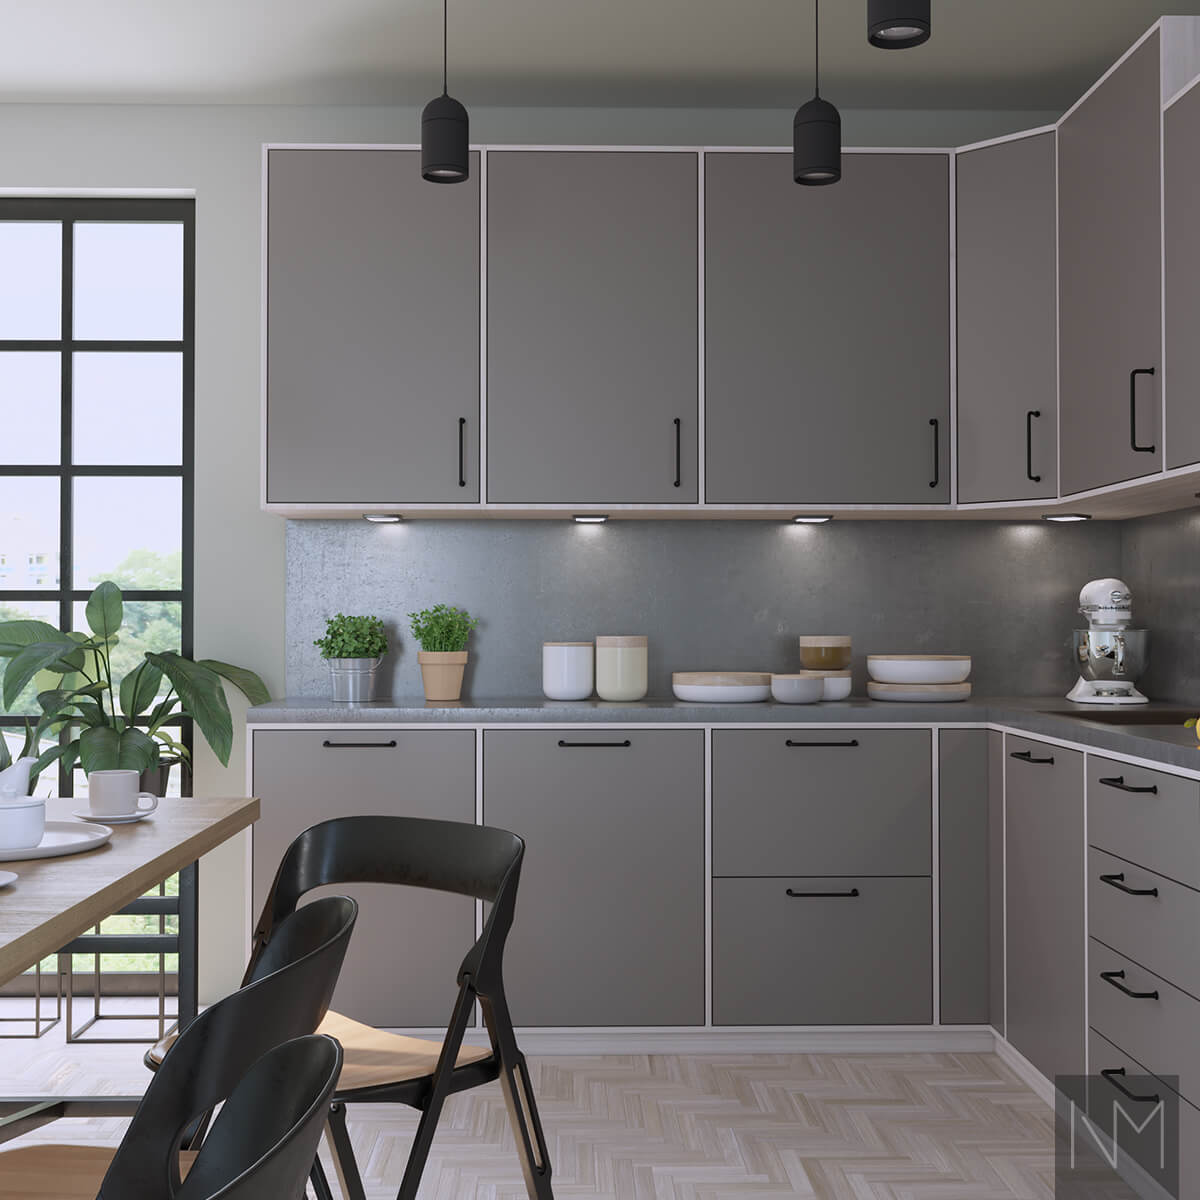 IKEA Metod or Faktum kitchen Basic. Colour Jotun Vandyke Brown 10249. Inframe style